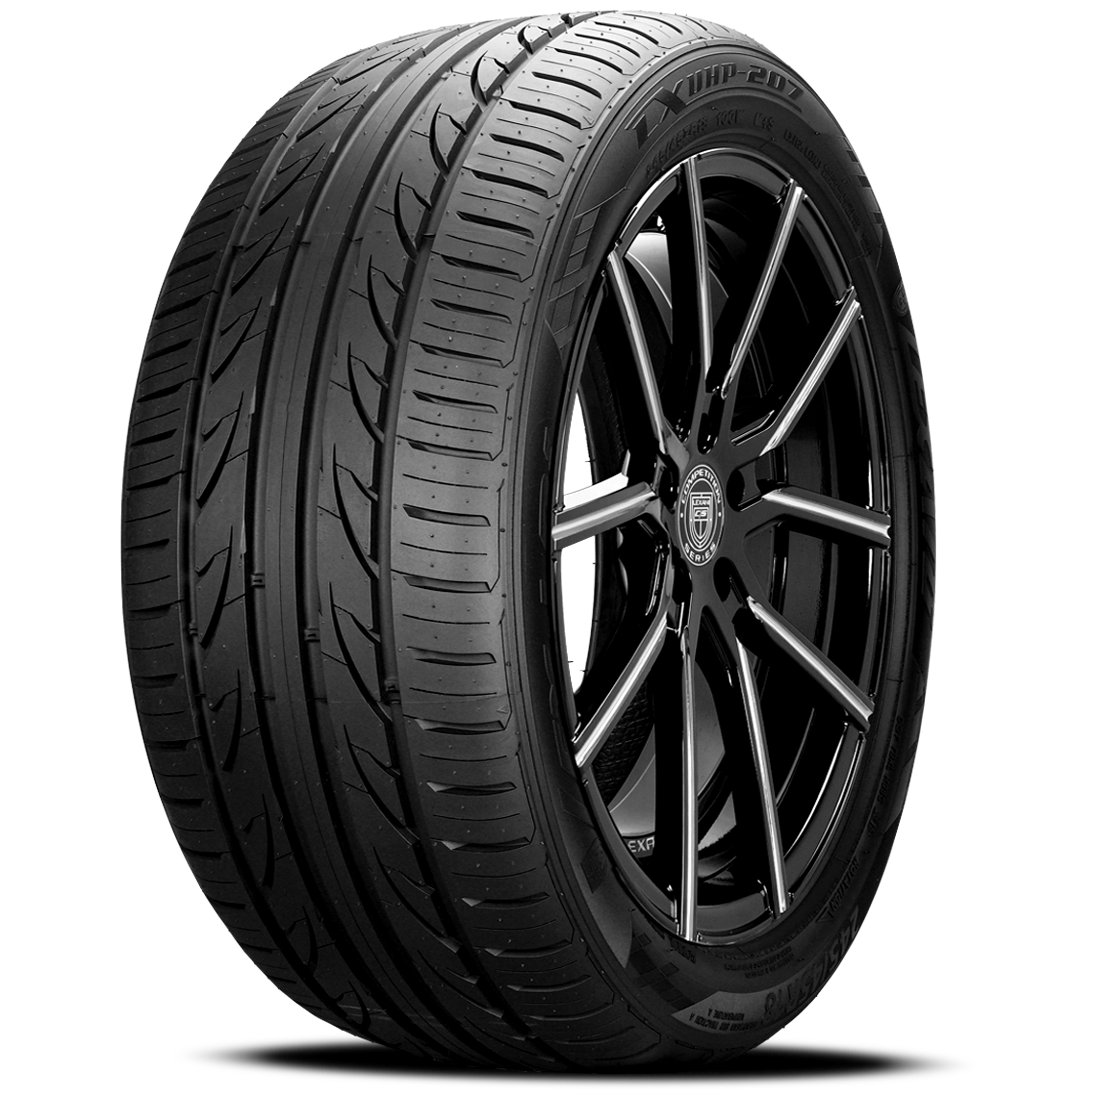 LEXANI LXUHP-207 215/50ZR17 (25.5X8.5R 17) Tires